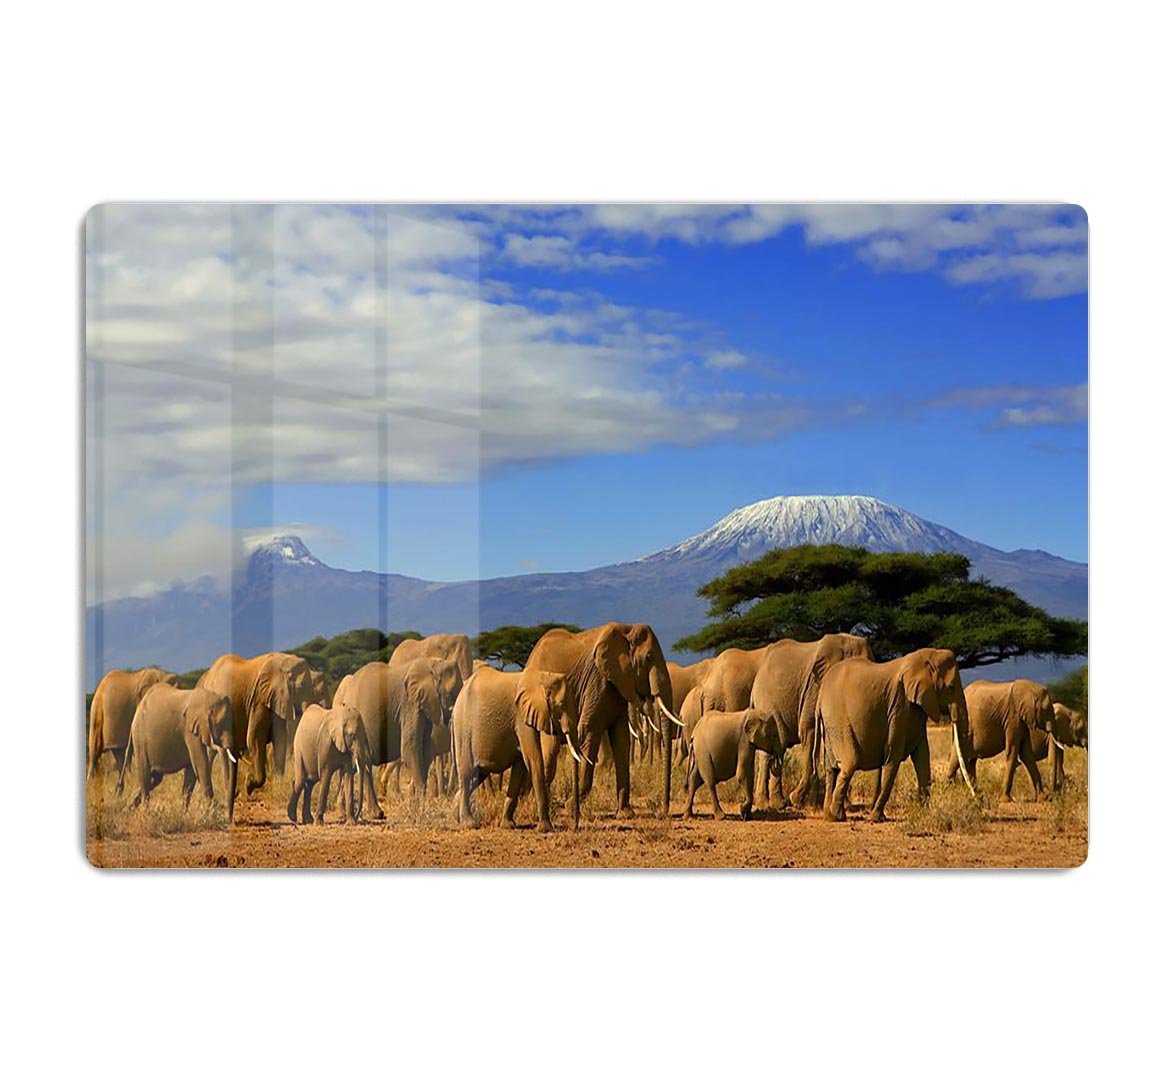 Kilimanjaro And Elephants HD Metal Print - Canvas Art Rocks - 1